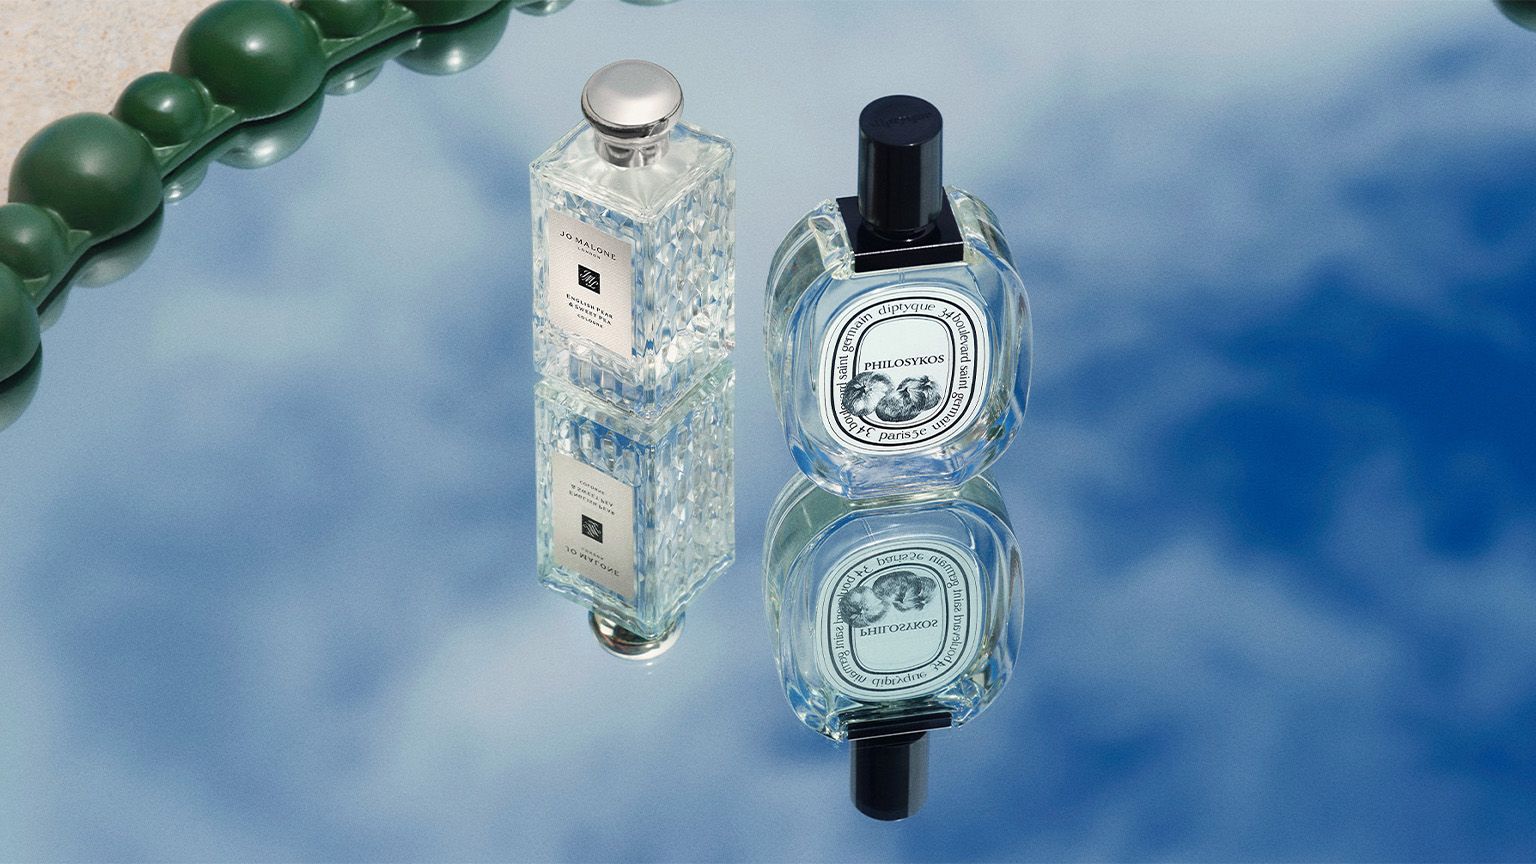 Fragrances sitting on a mirrow reflecting the sky